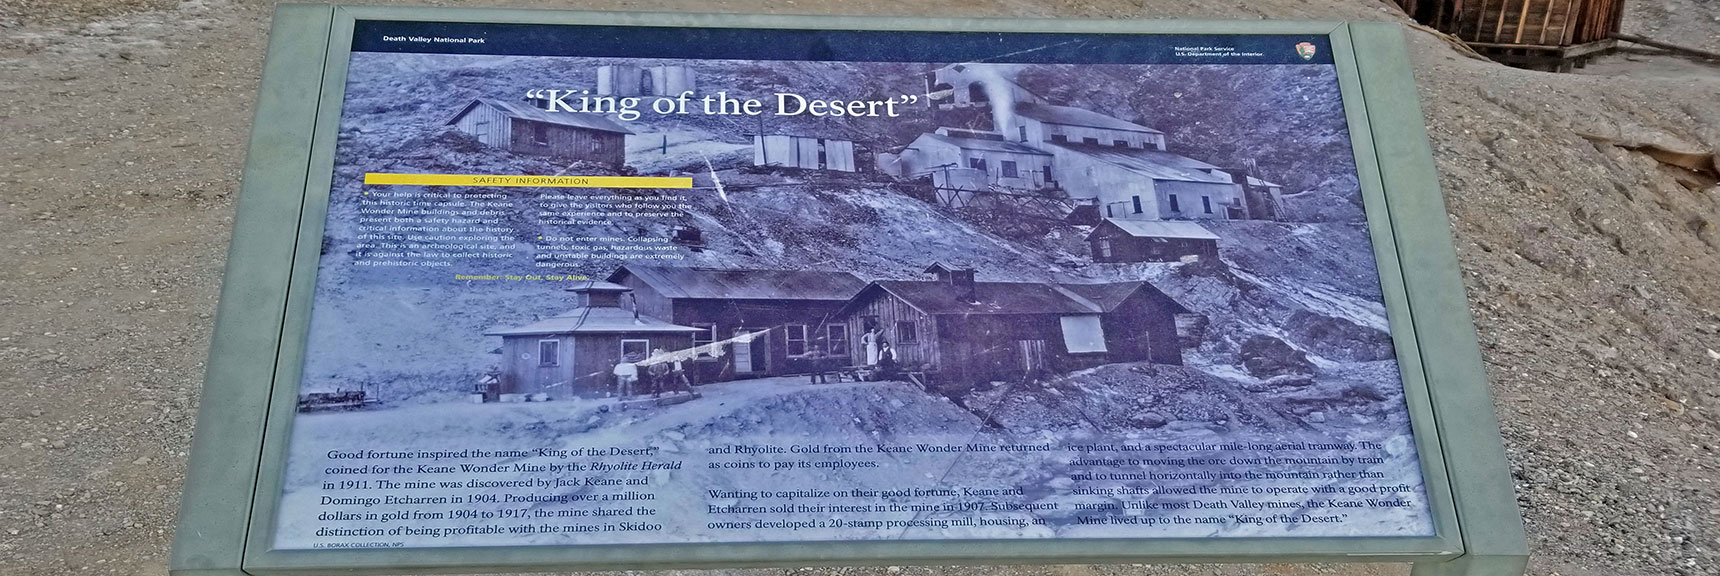 Interpretive Display at Lower Stamp Mill | Keane Wonder Mine | Death Valley National Park, California